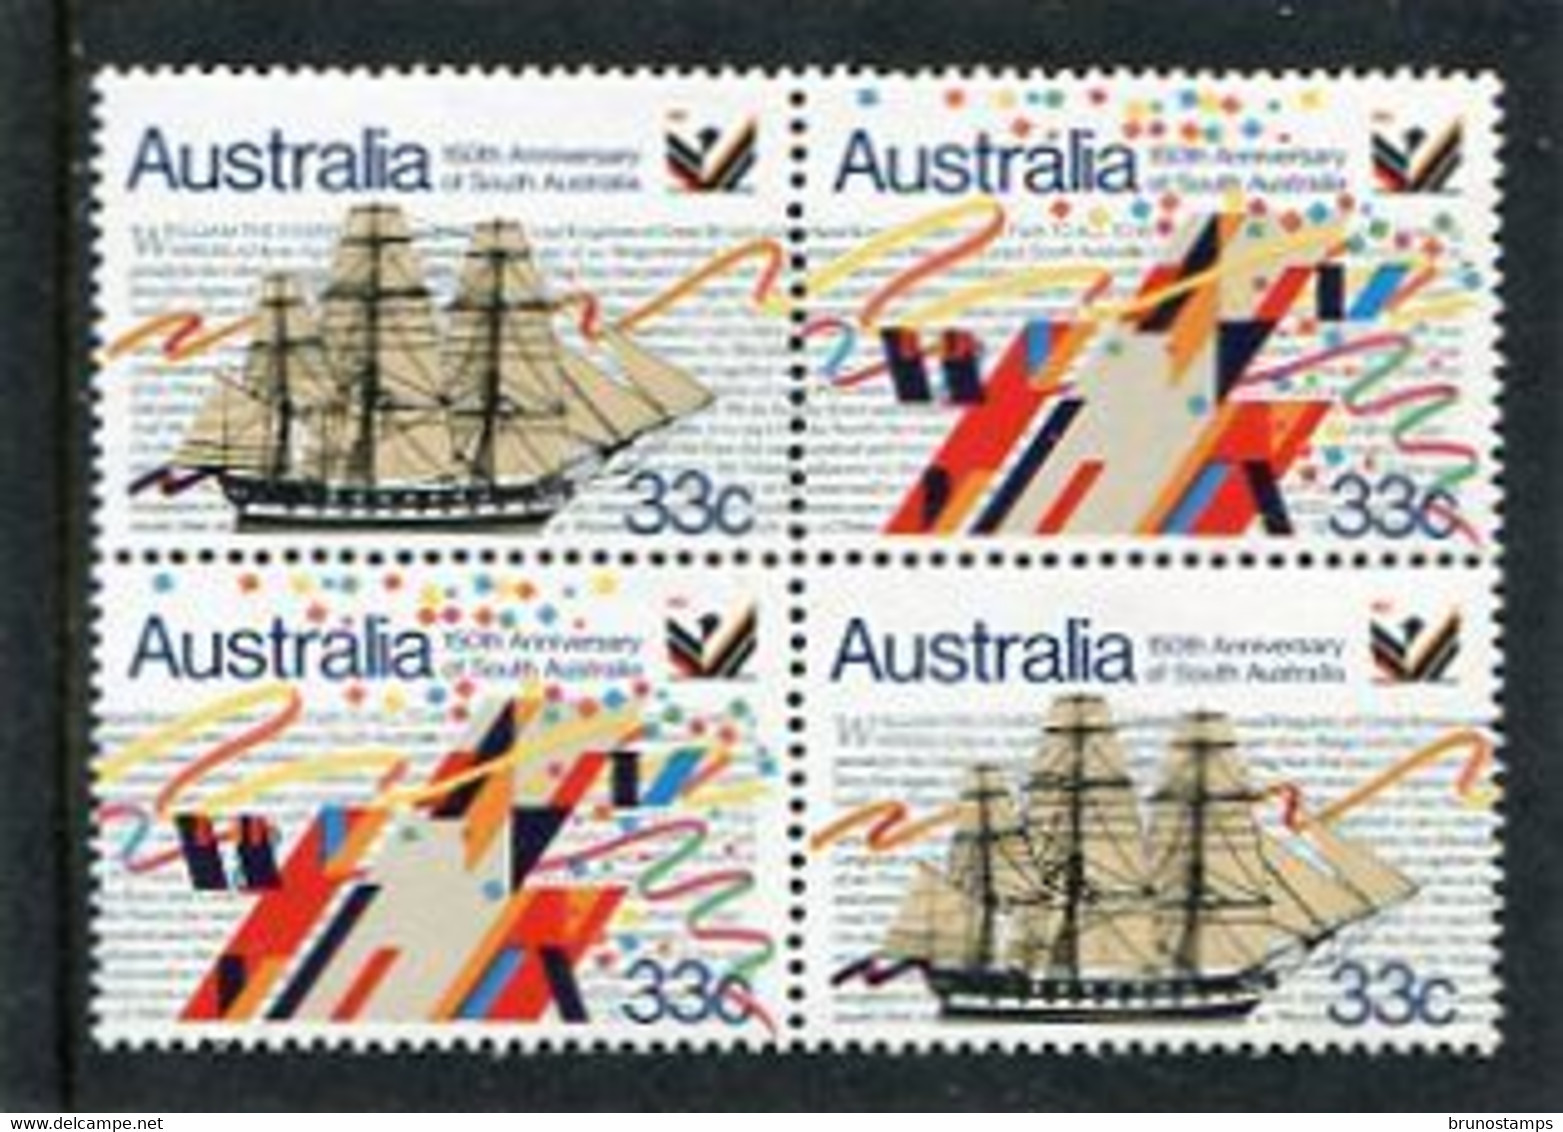 AUSTRALIA - 1986  SOUTH AUSTRALIA  BLOCK OF 4  MINT NH - Mint Stamps